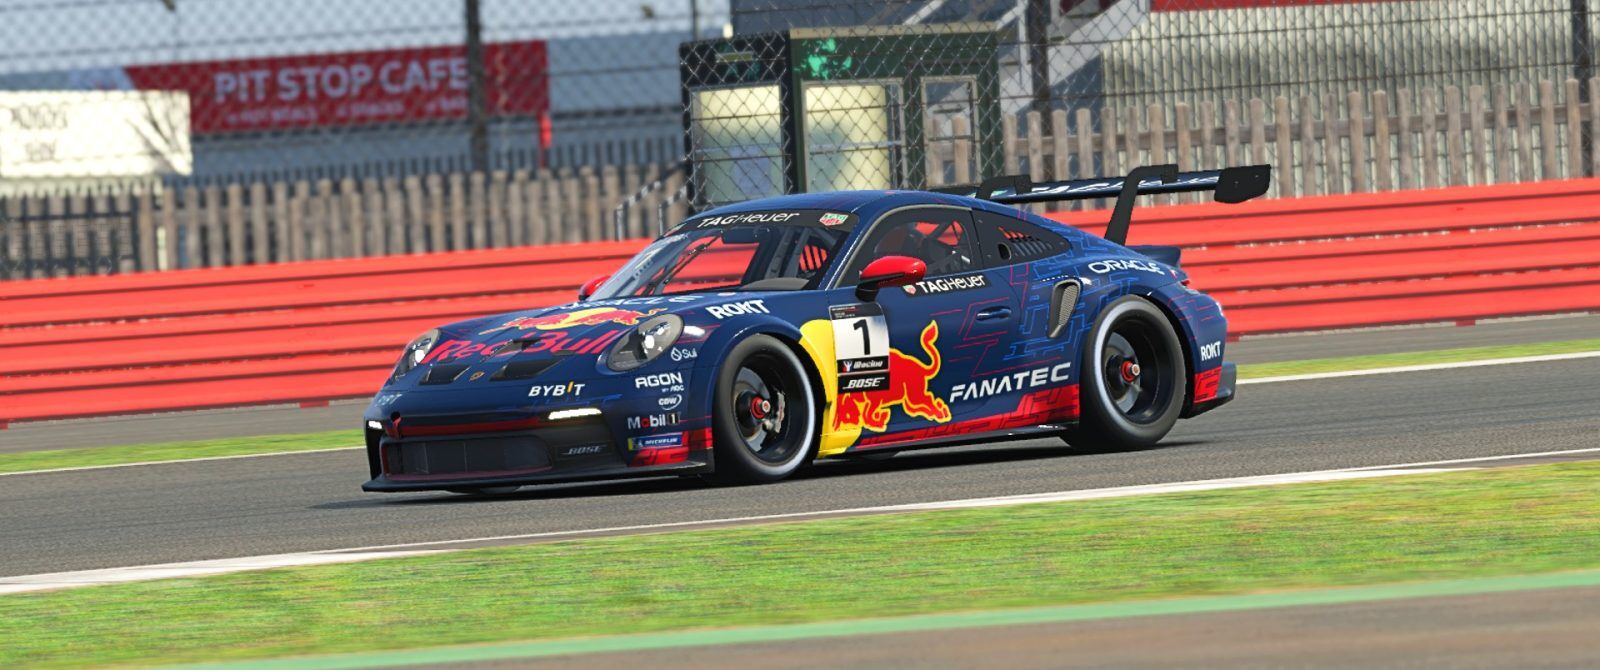 A Red Bull livery Porsche 911 racing car.